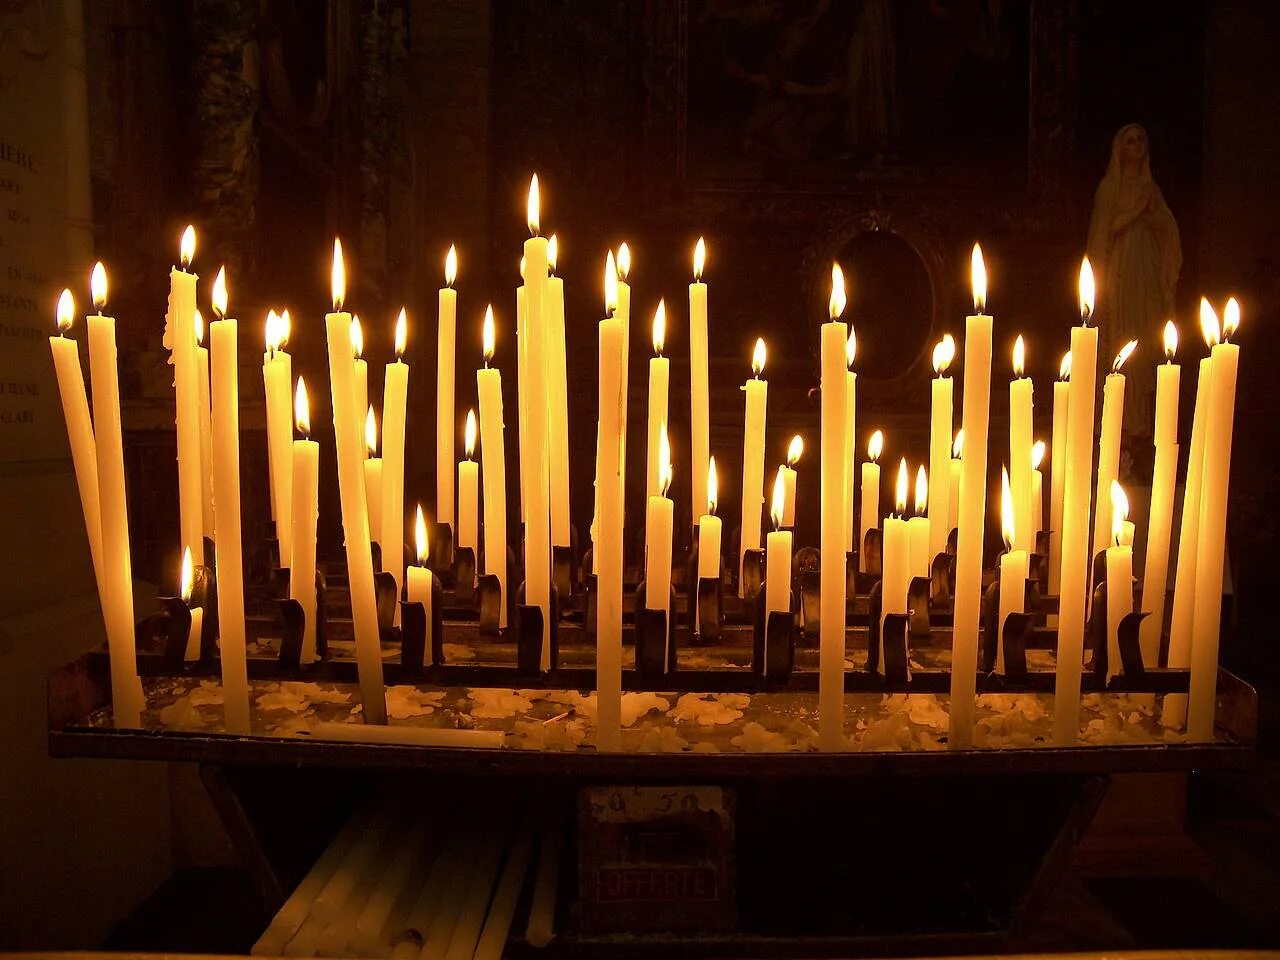 В церкви горят свечи. Церковные свечи. Свечи в храме. Горящие свечи в храме. Свечи в православном храме.